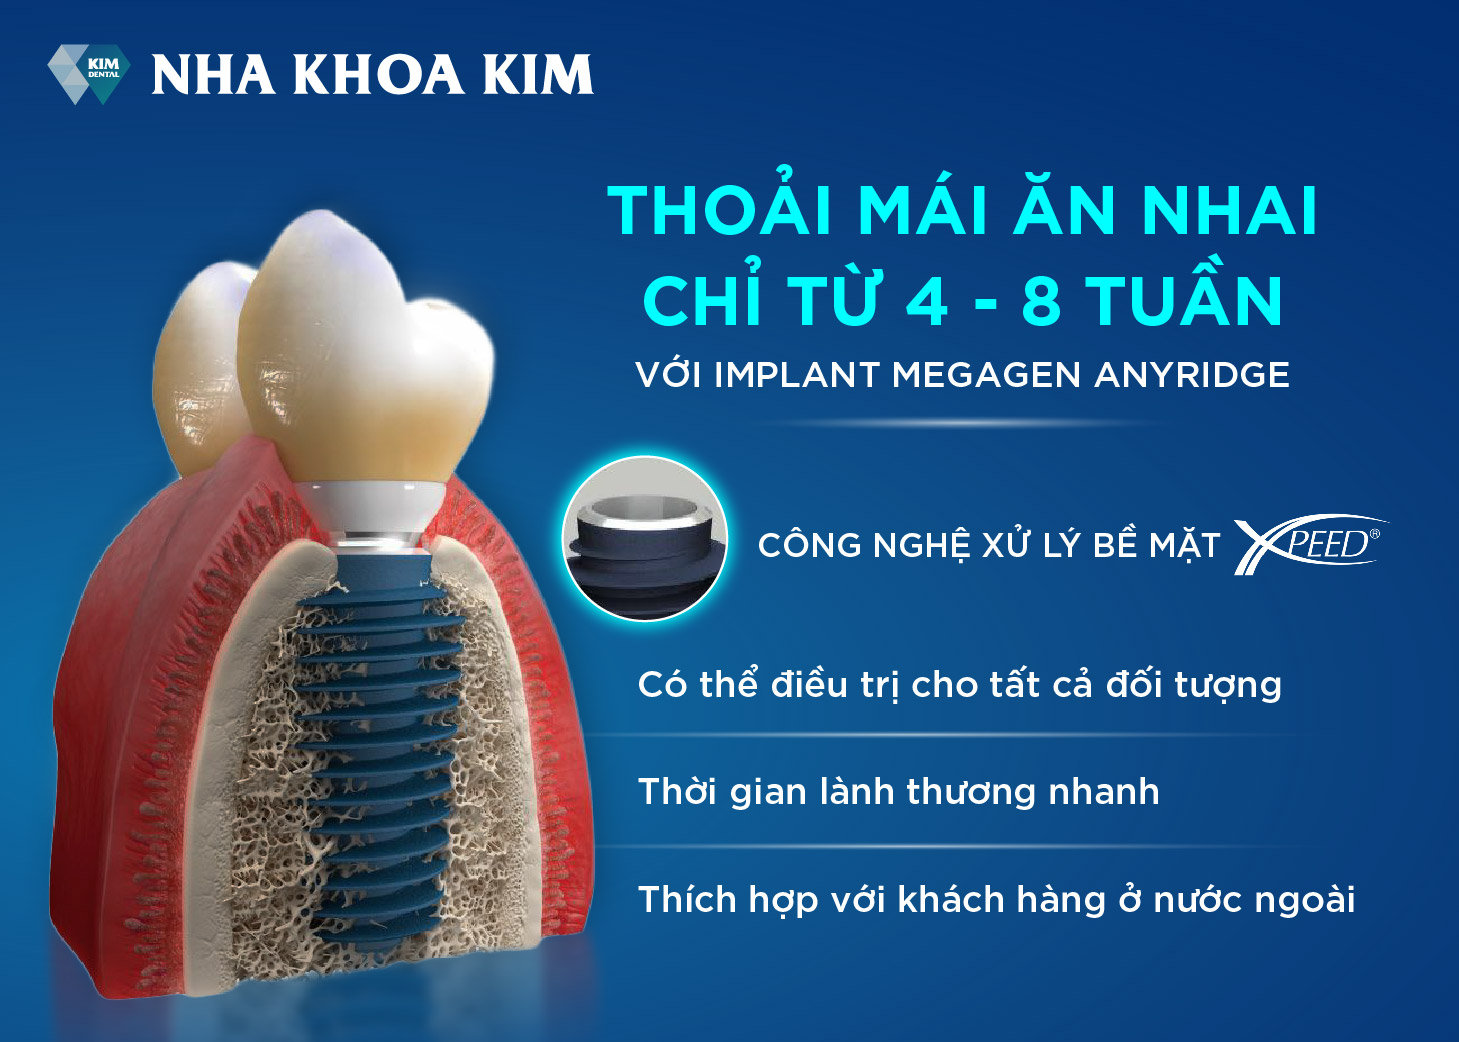 trồng răng implant - trụ implant megagen anyridge